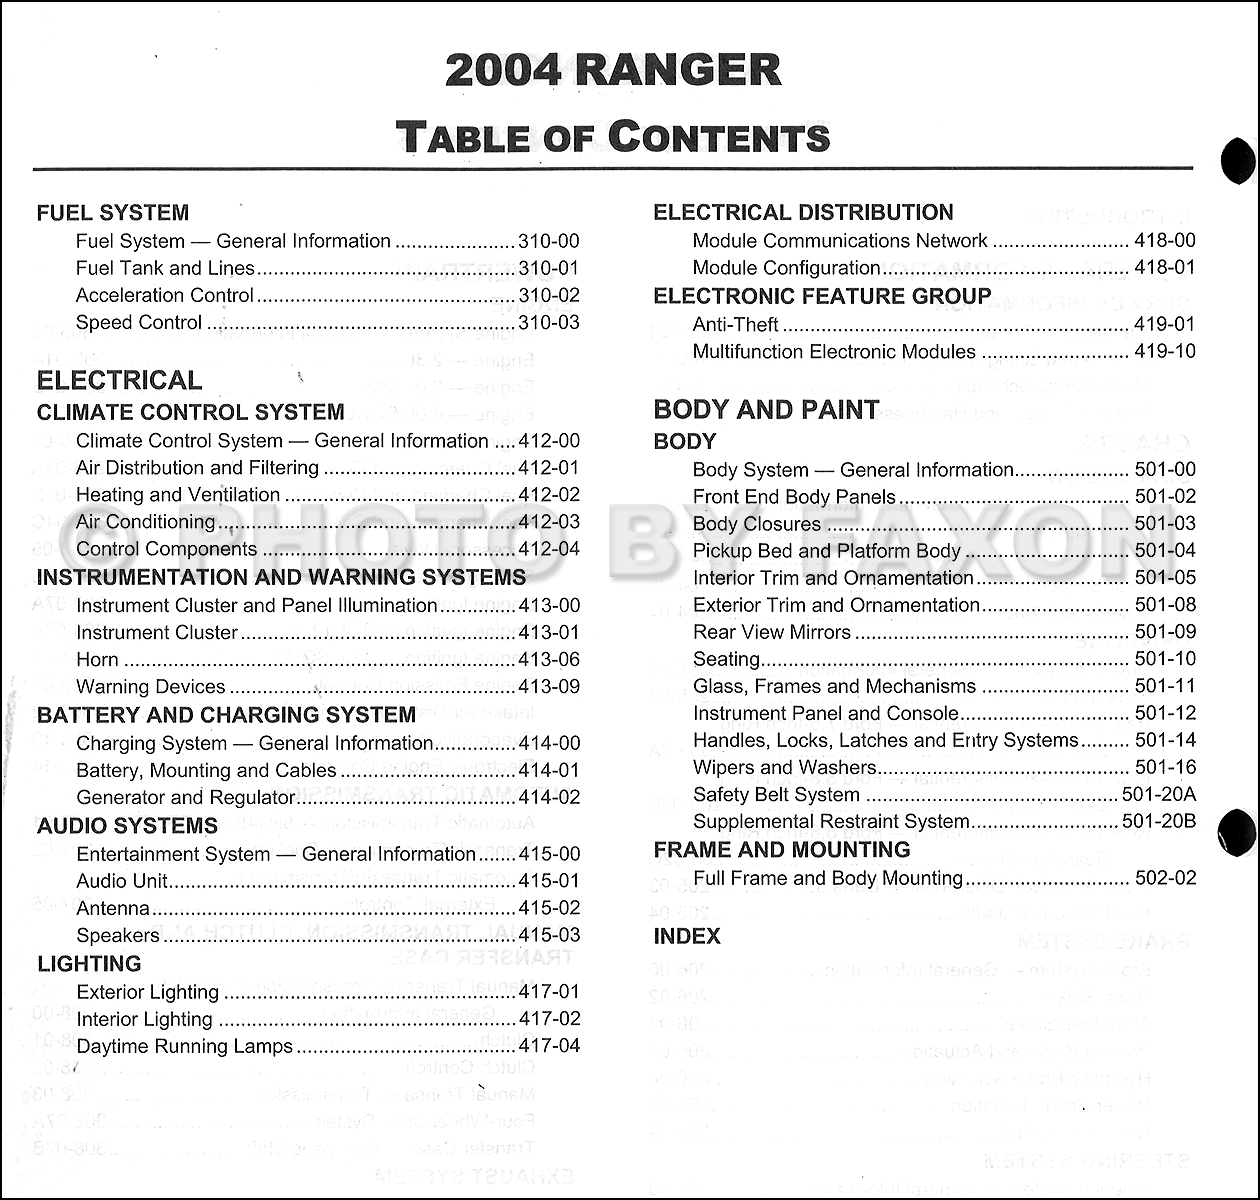 2004 Ford ranger edge service manual #1